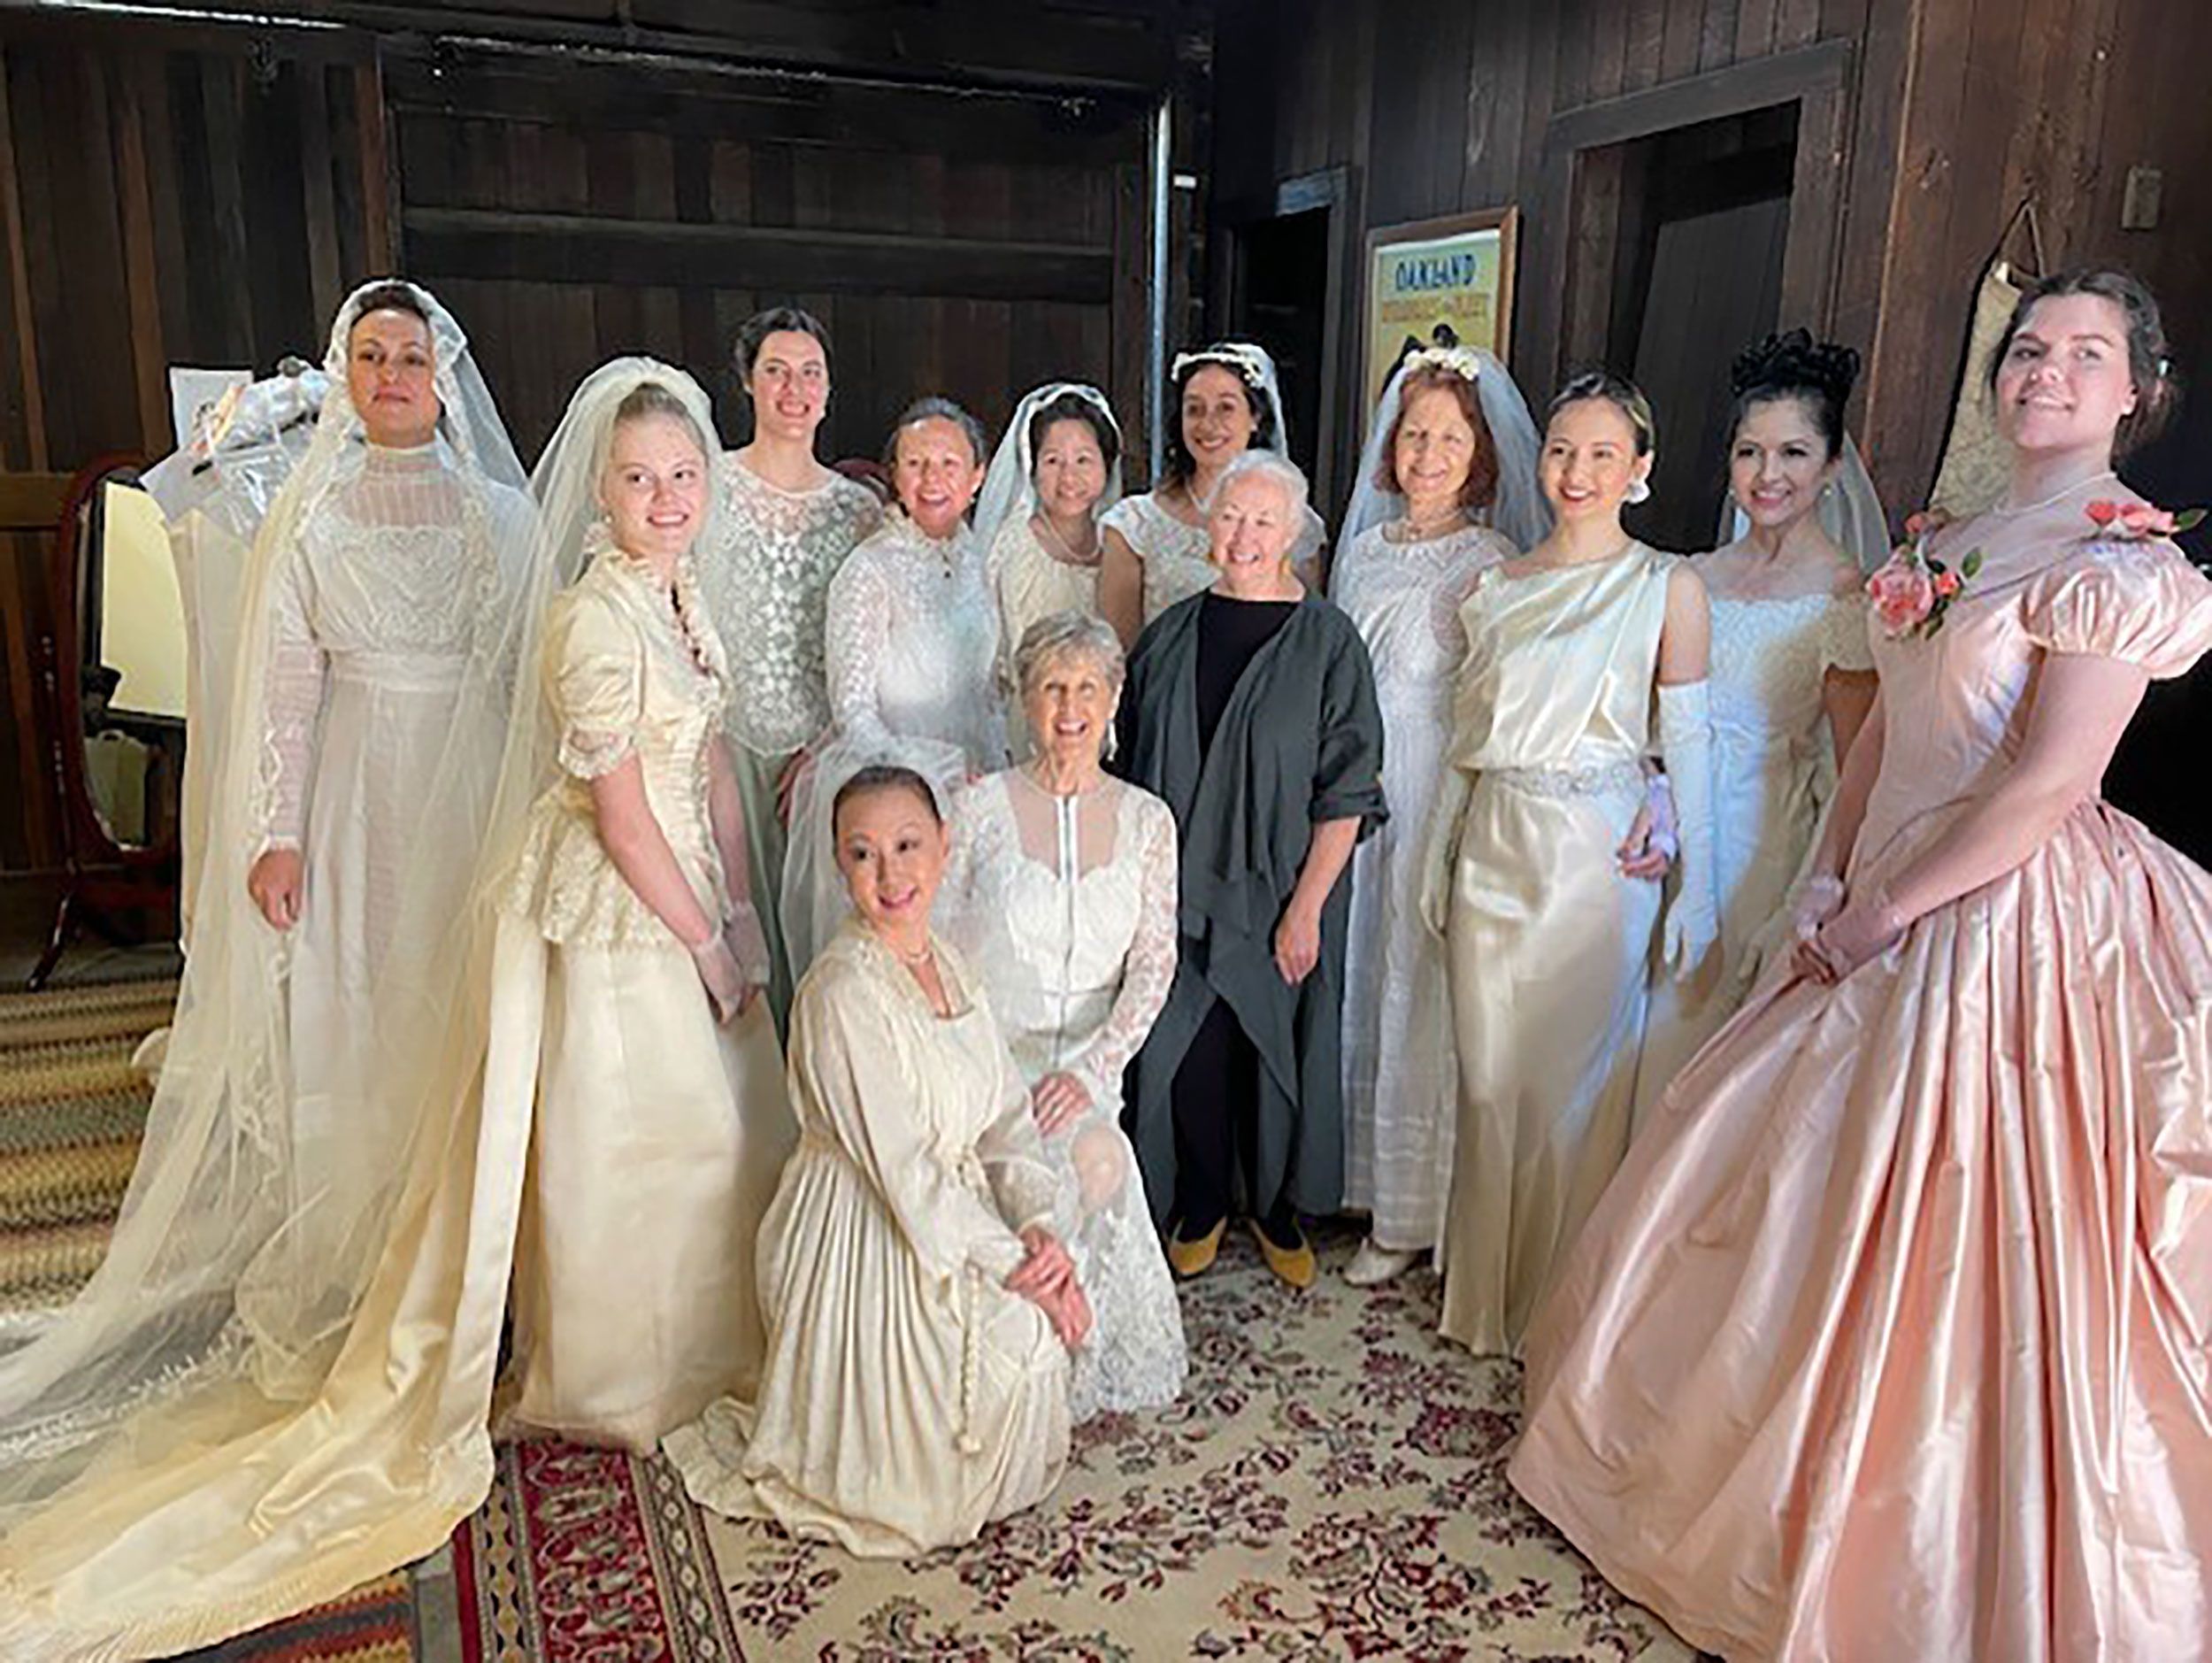 https://media.cnn.com/api/v1/images/stellar/prod/230630122203-01-historic-wedding-dress-show.jpg?c=original